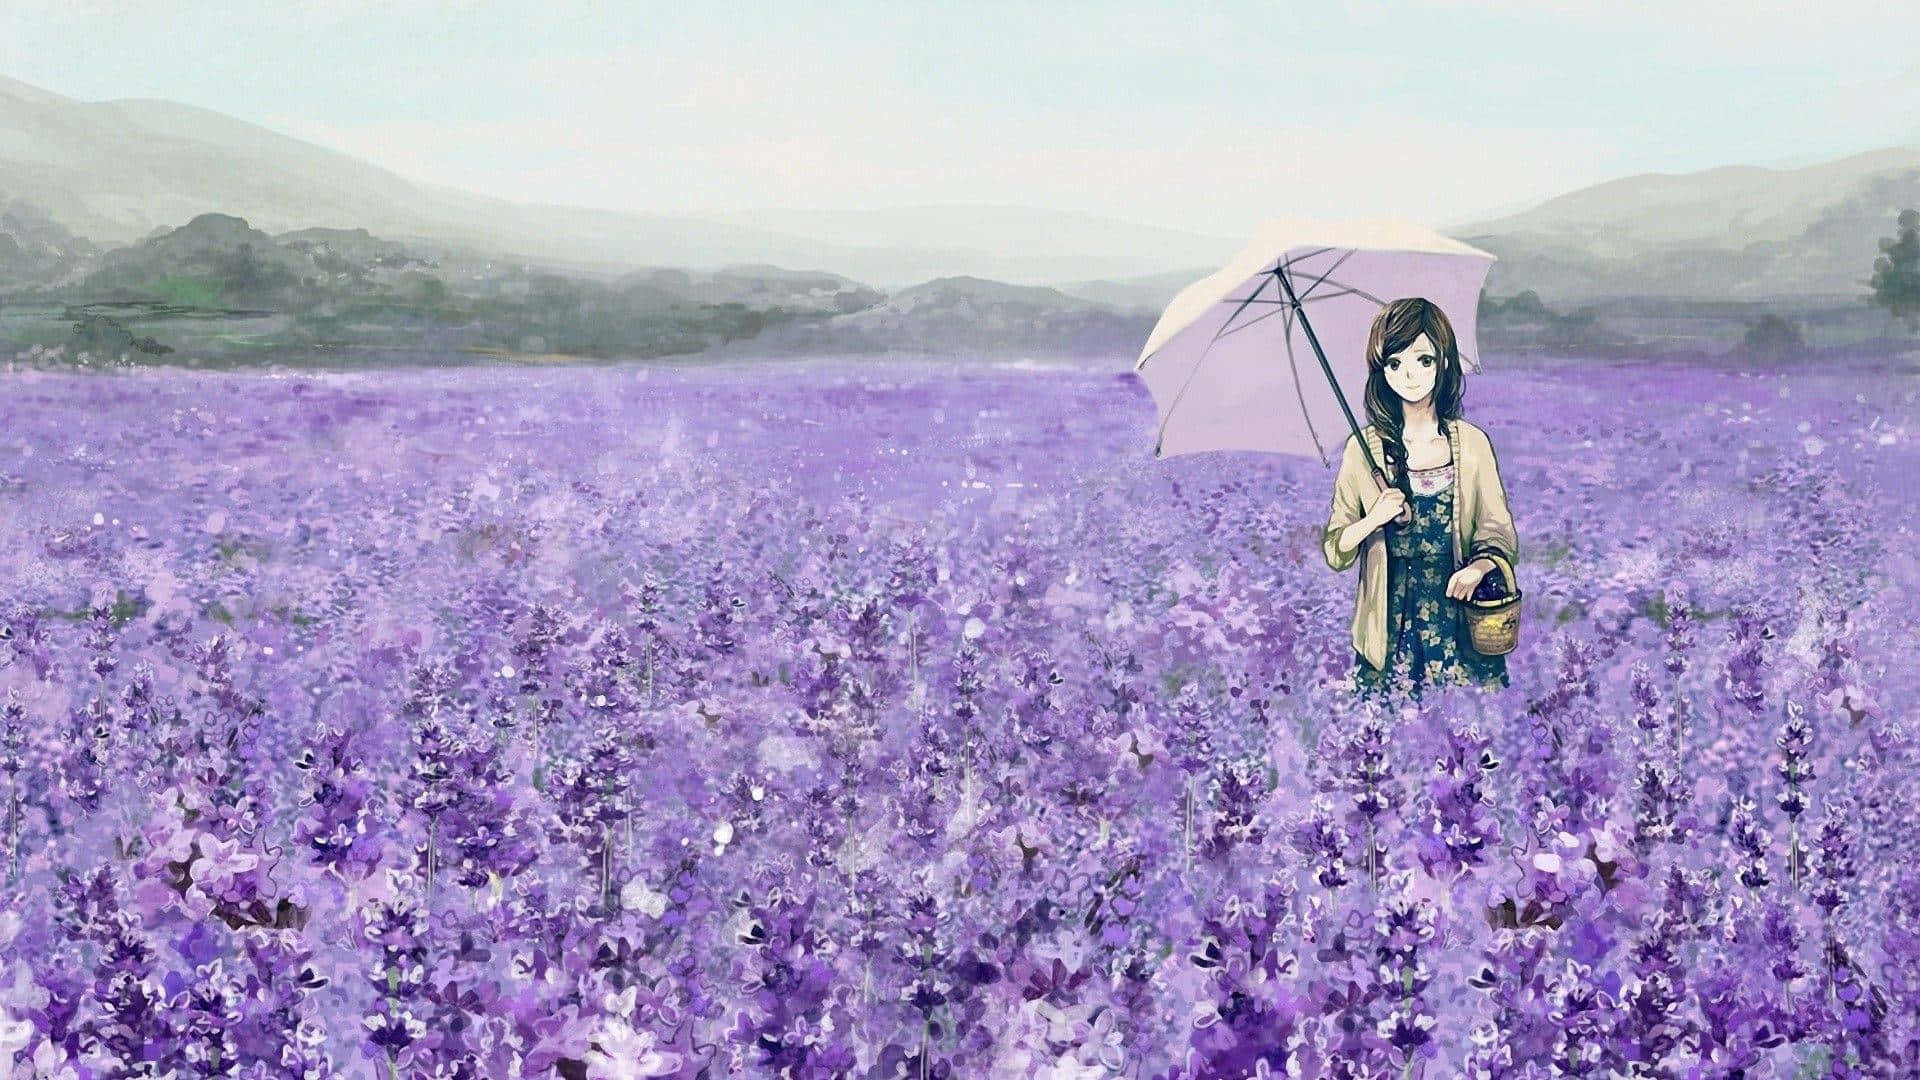 Pretty Purple Field Of Lavender Wallpaper